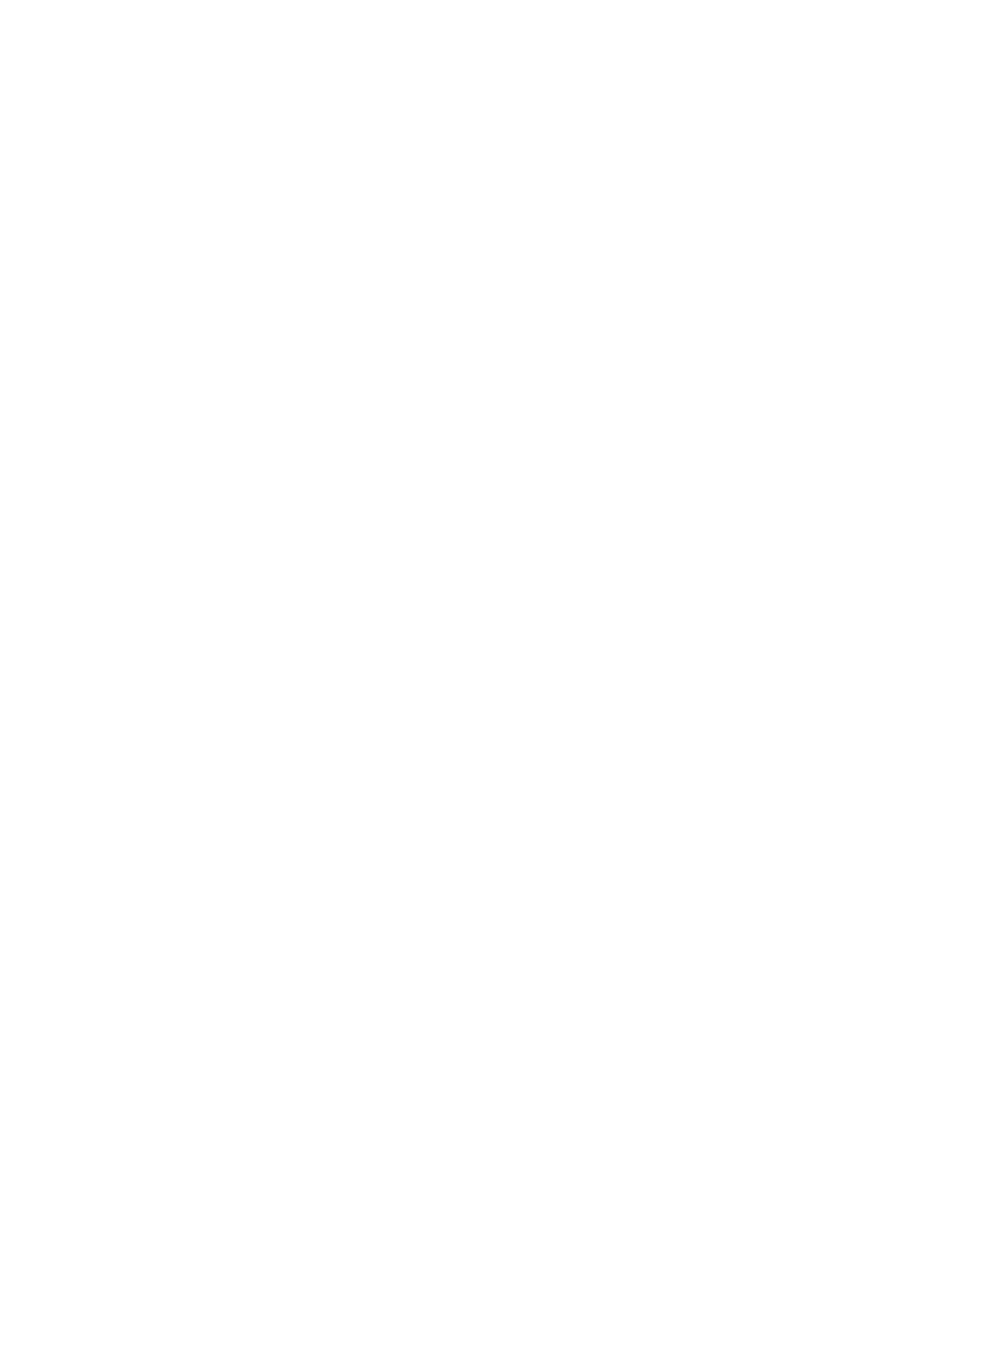 disneyland clipart snow white castle